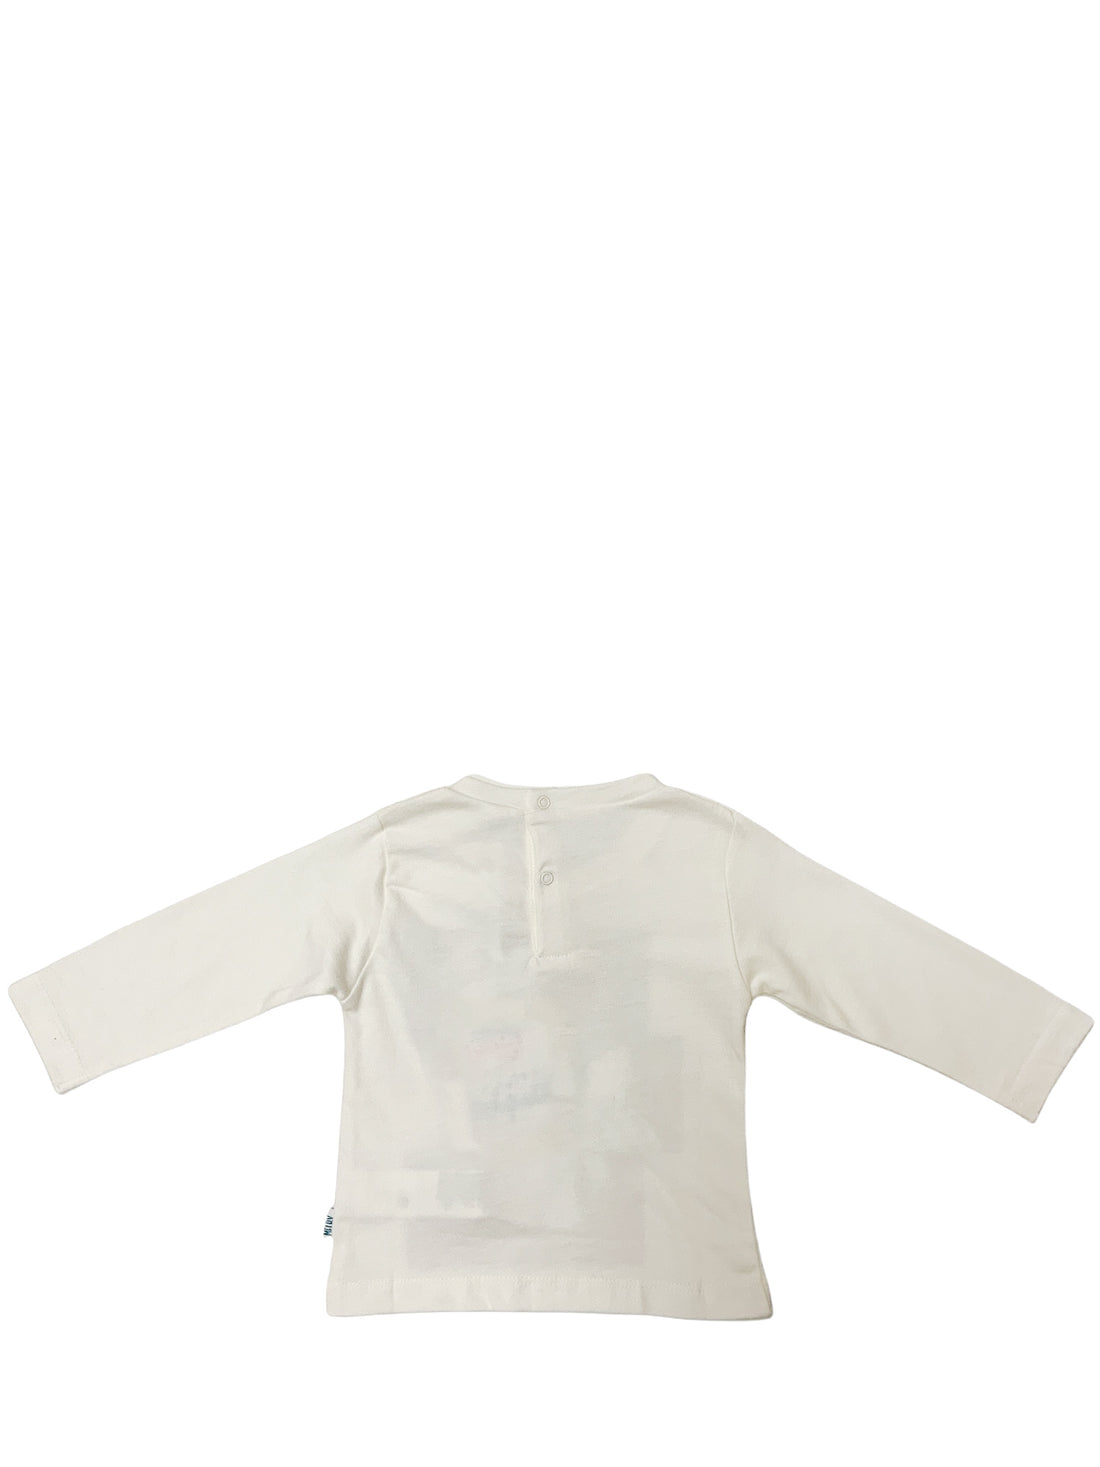 T-shirt Bianco 416l Melby